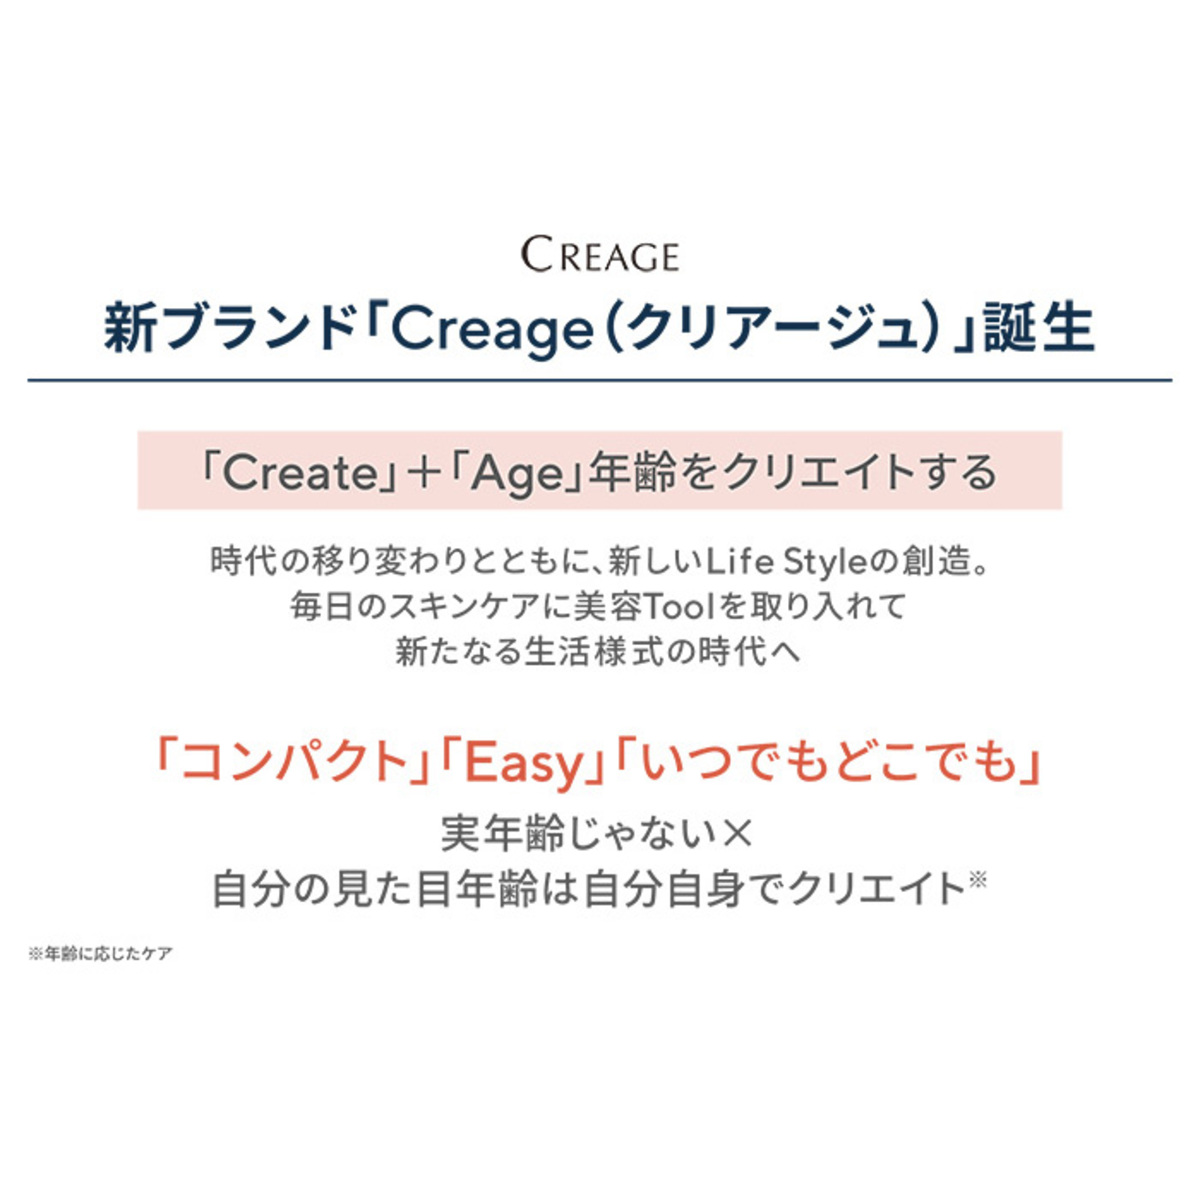 Creage 家庭用美顔器「アイリフト」 - QVC.jp